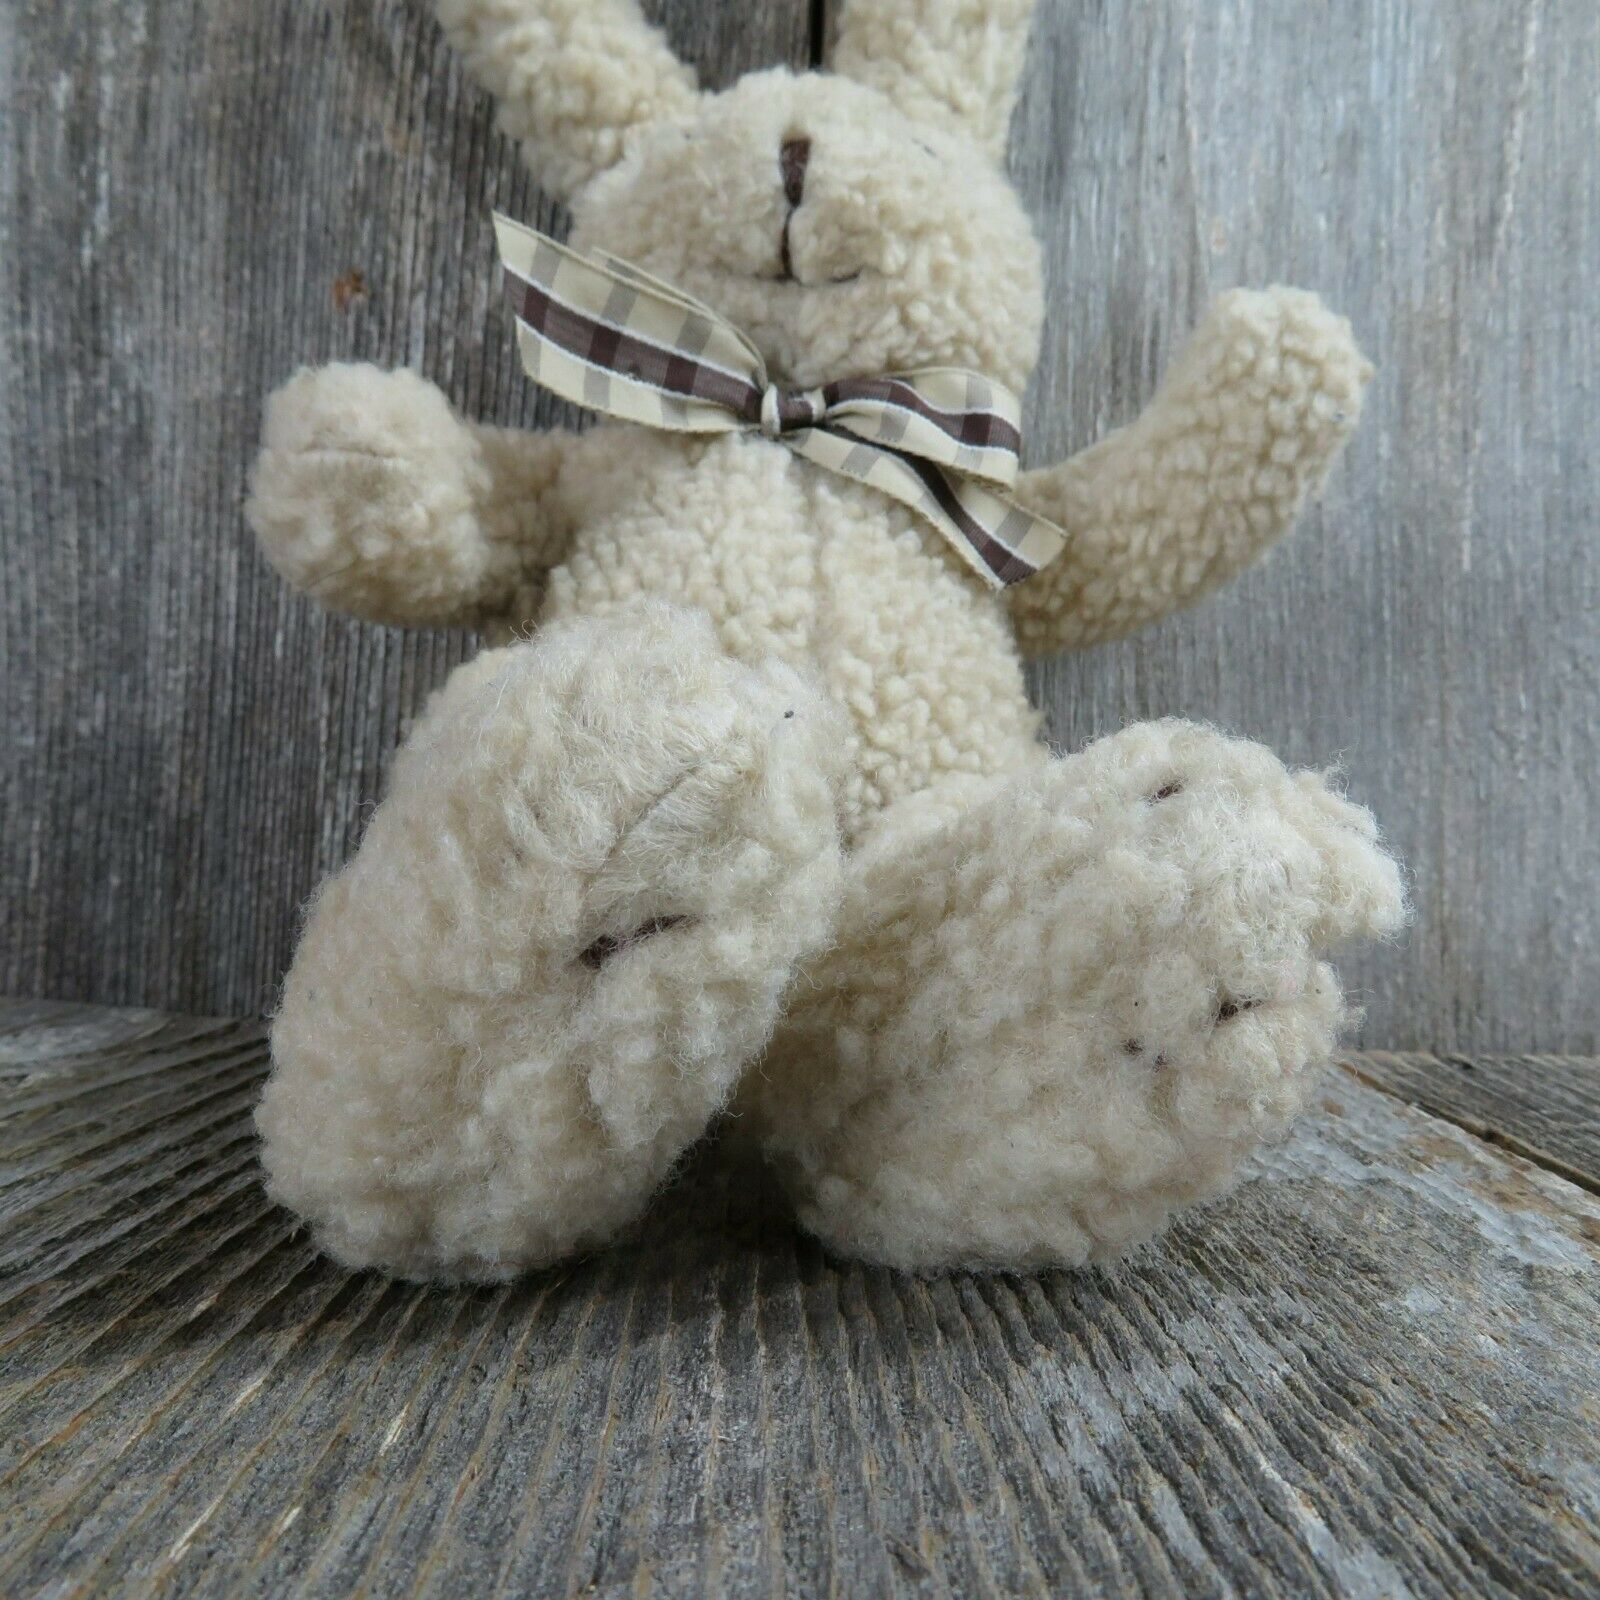 Vintage Bunny Rabbit Plush Russ Easter Nibbles Jr Stuffed Animal Toy Doll - At Grandma's Table